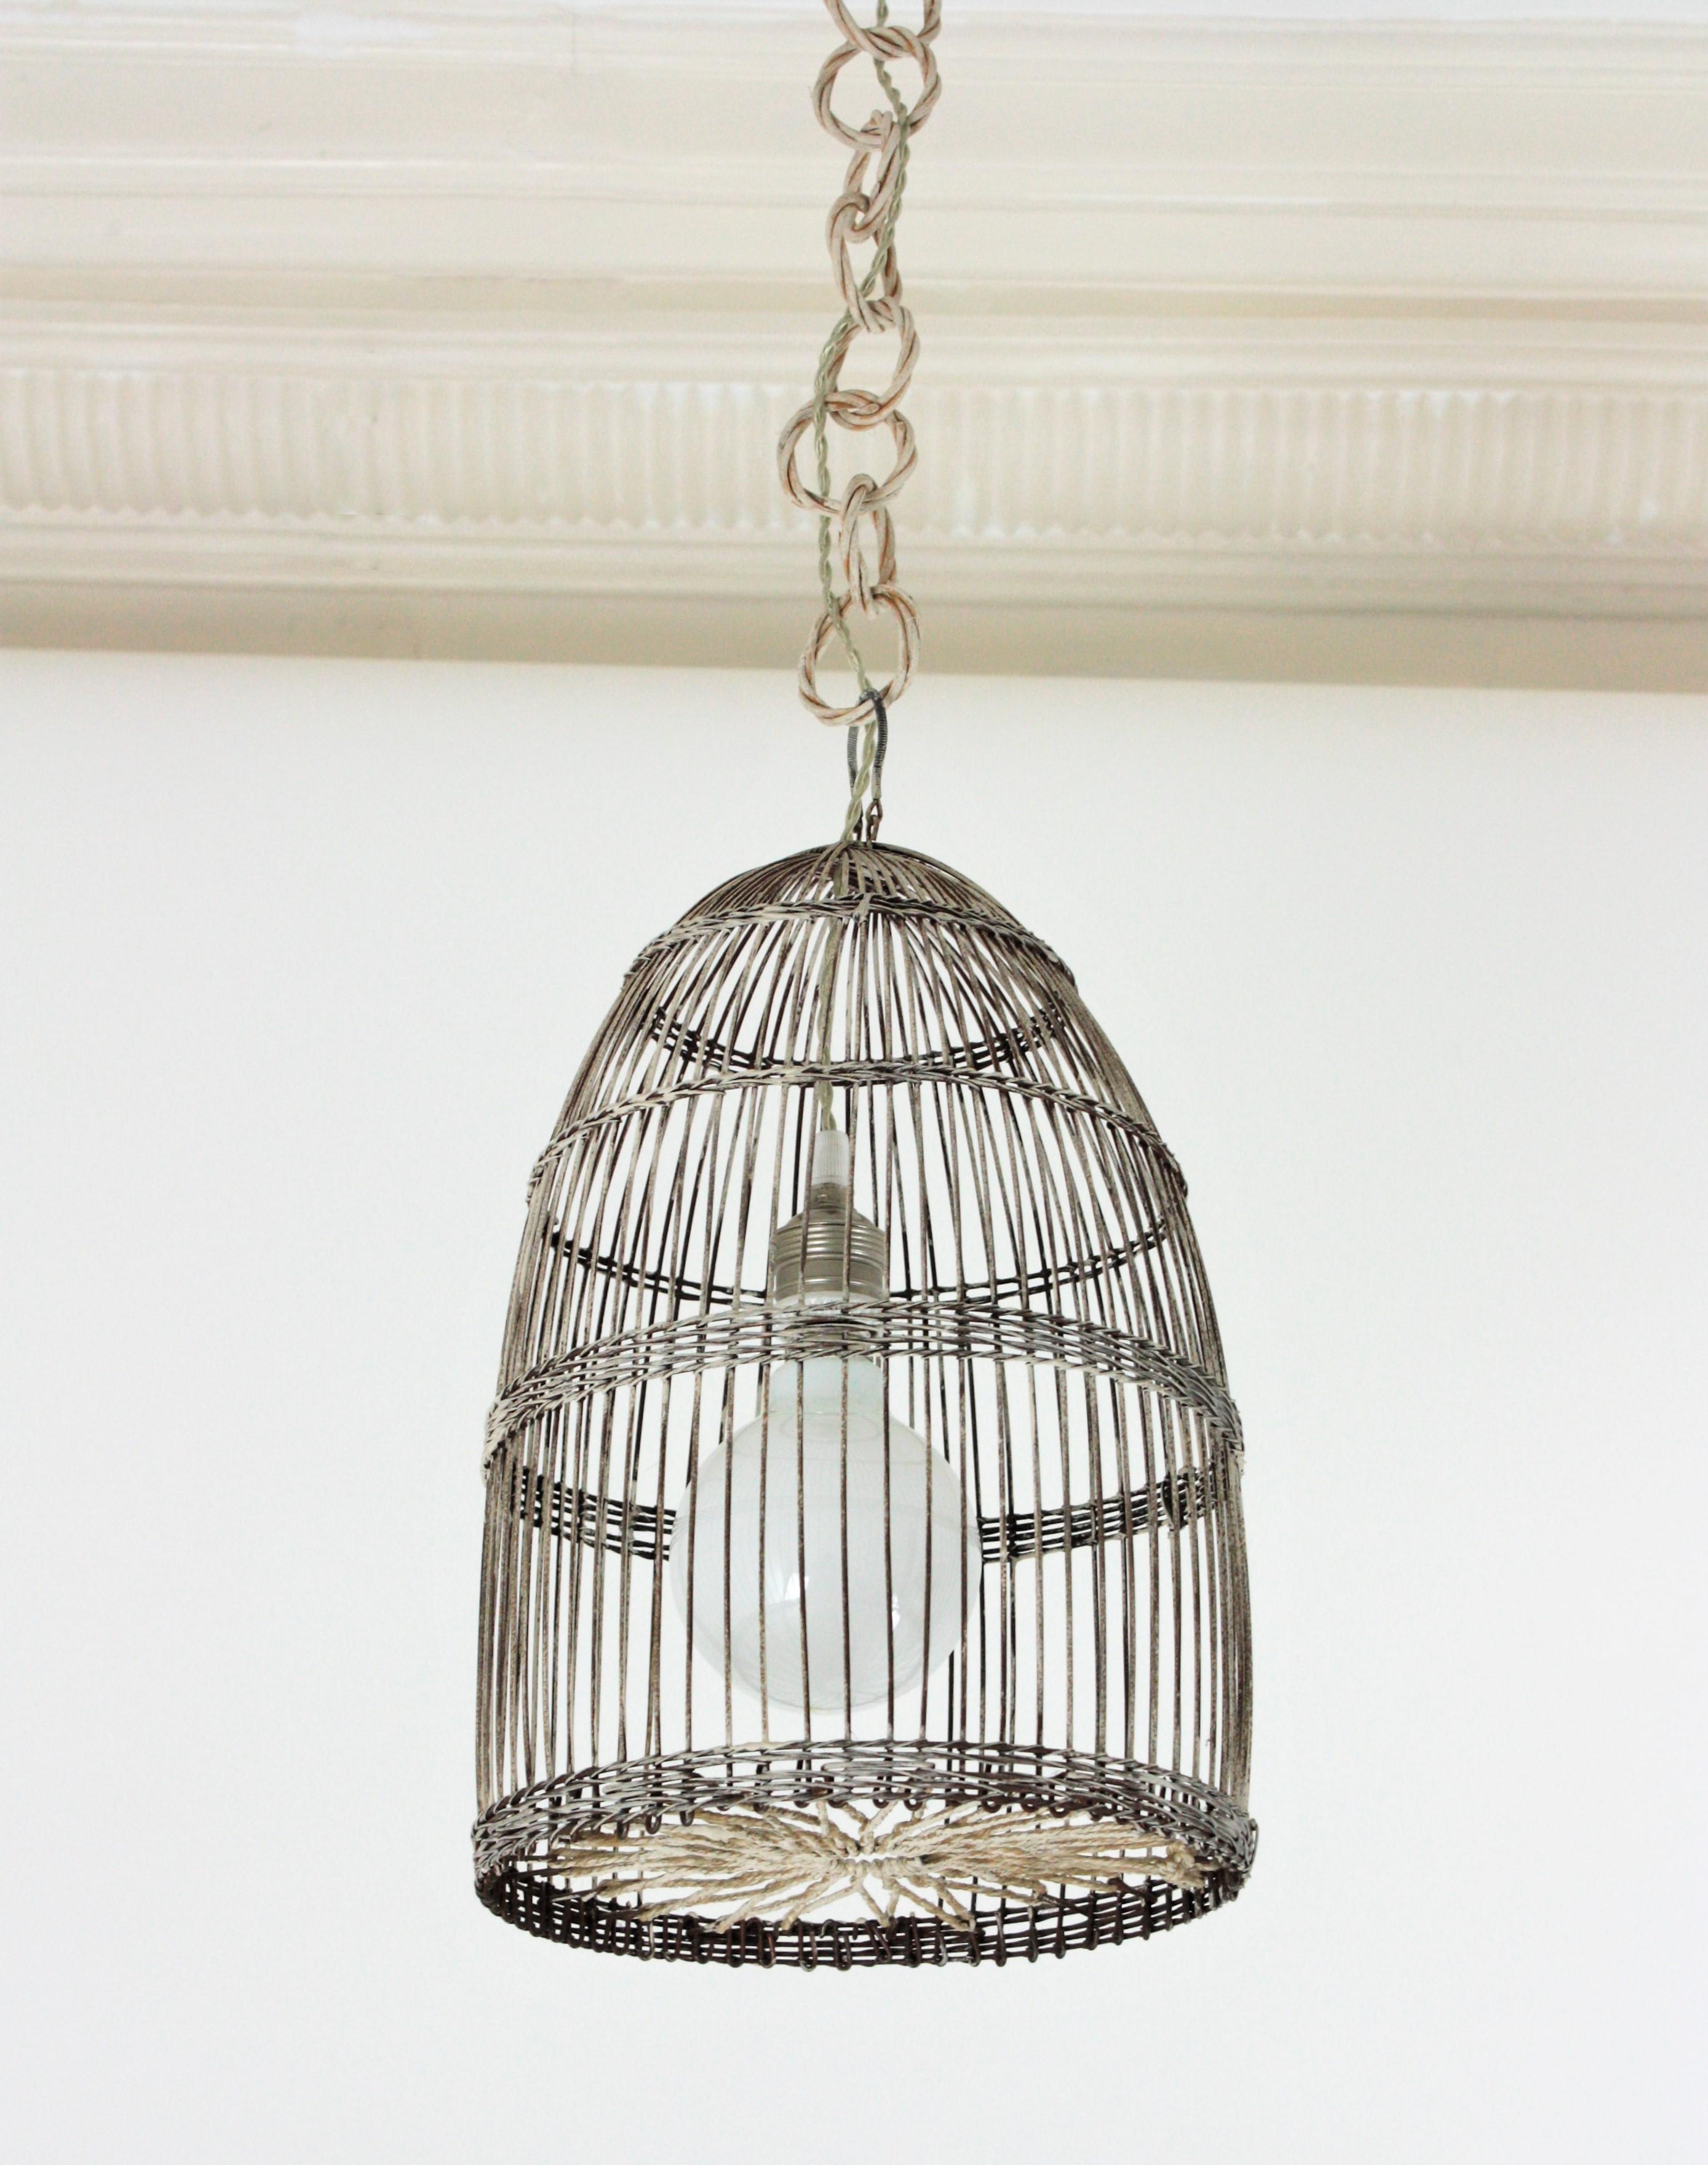 Birdcage Rustic Hanging Light Pendant Lamp 7